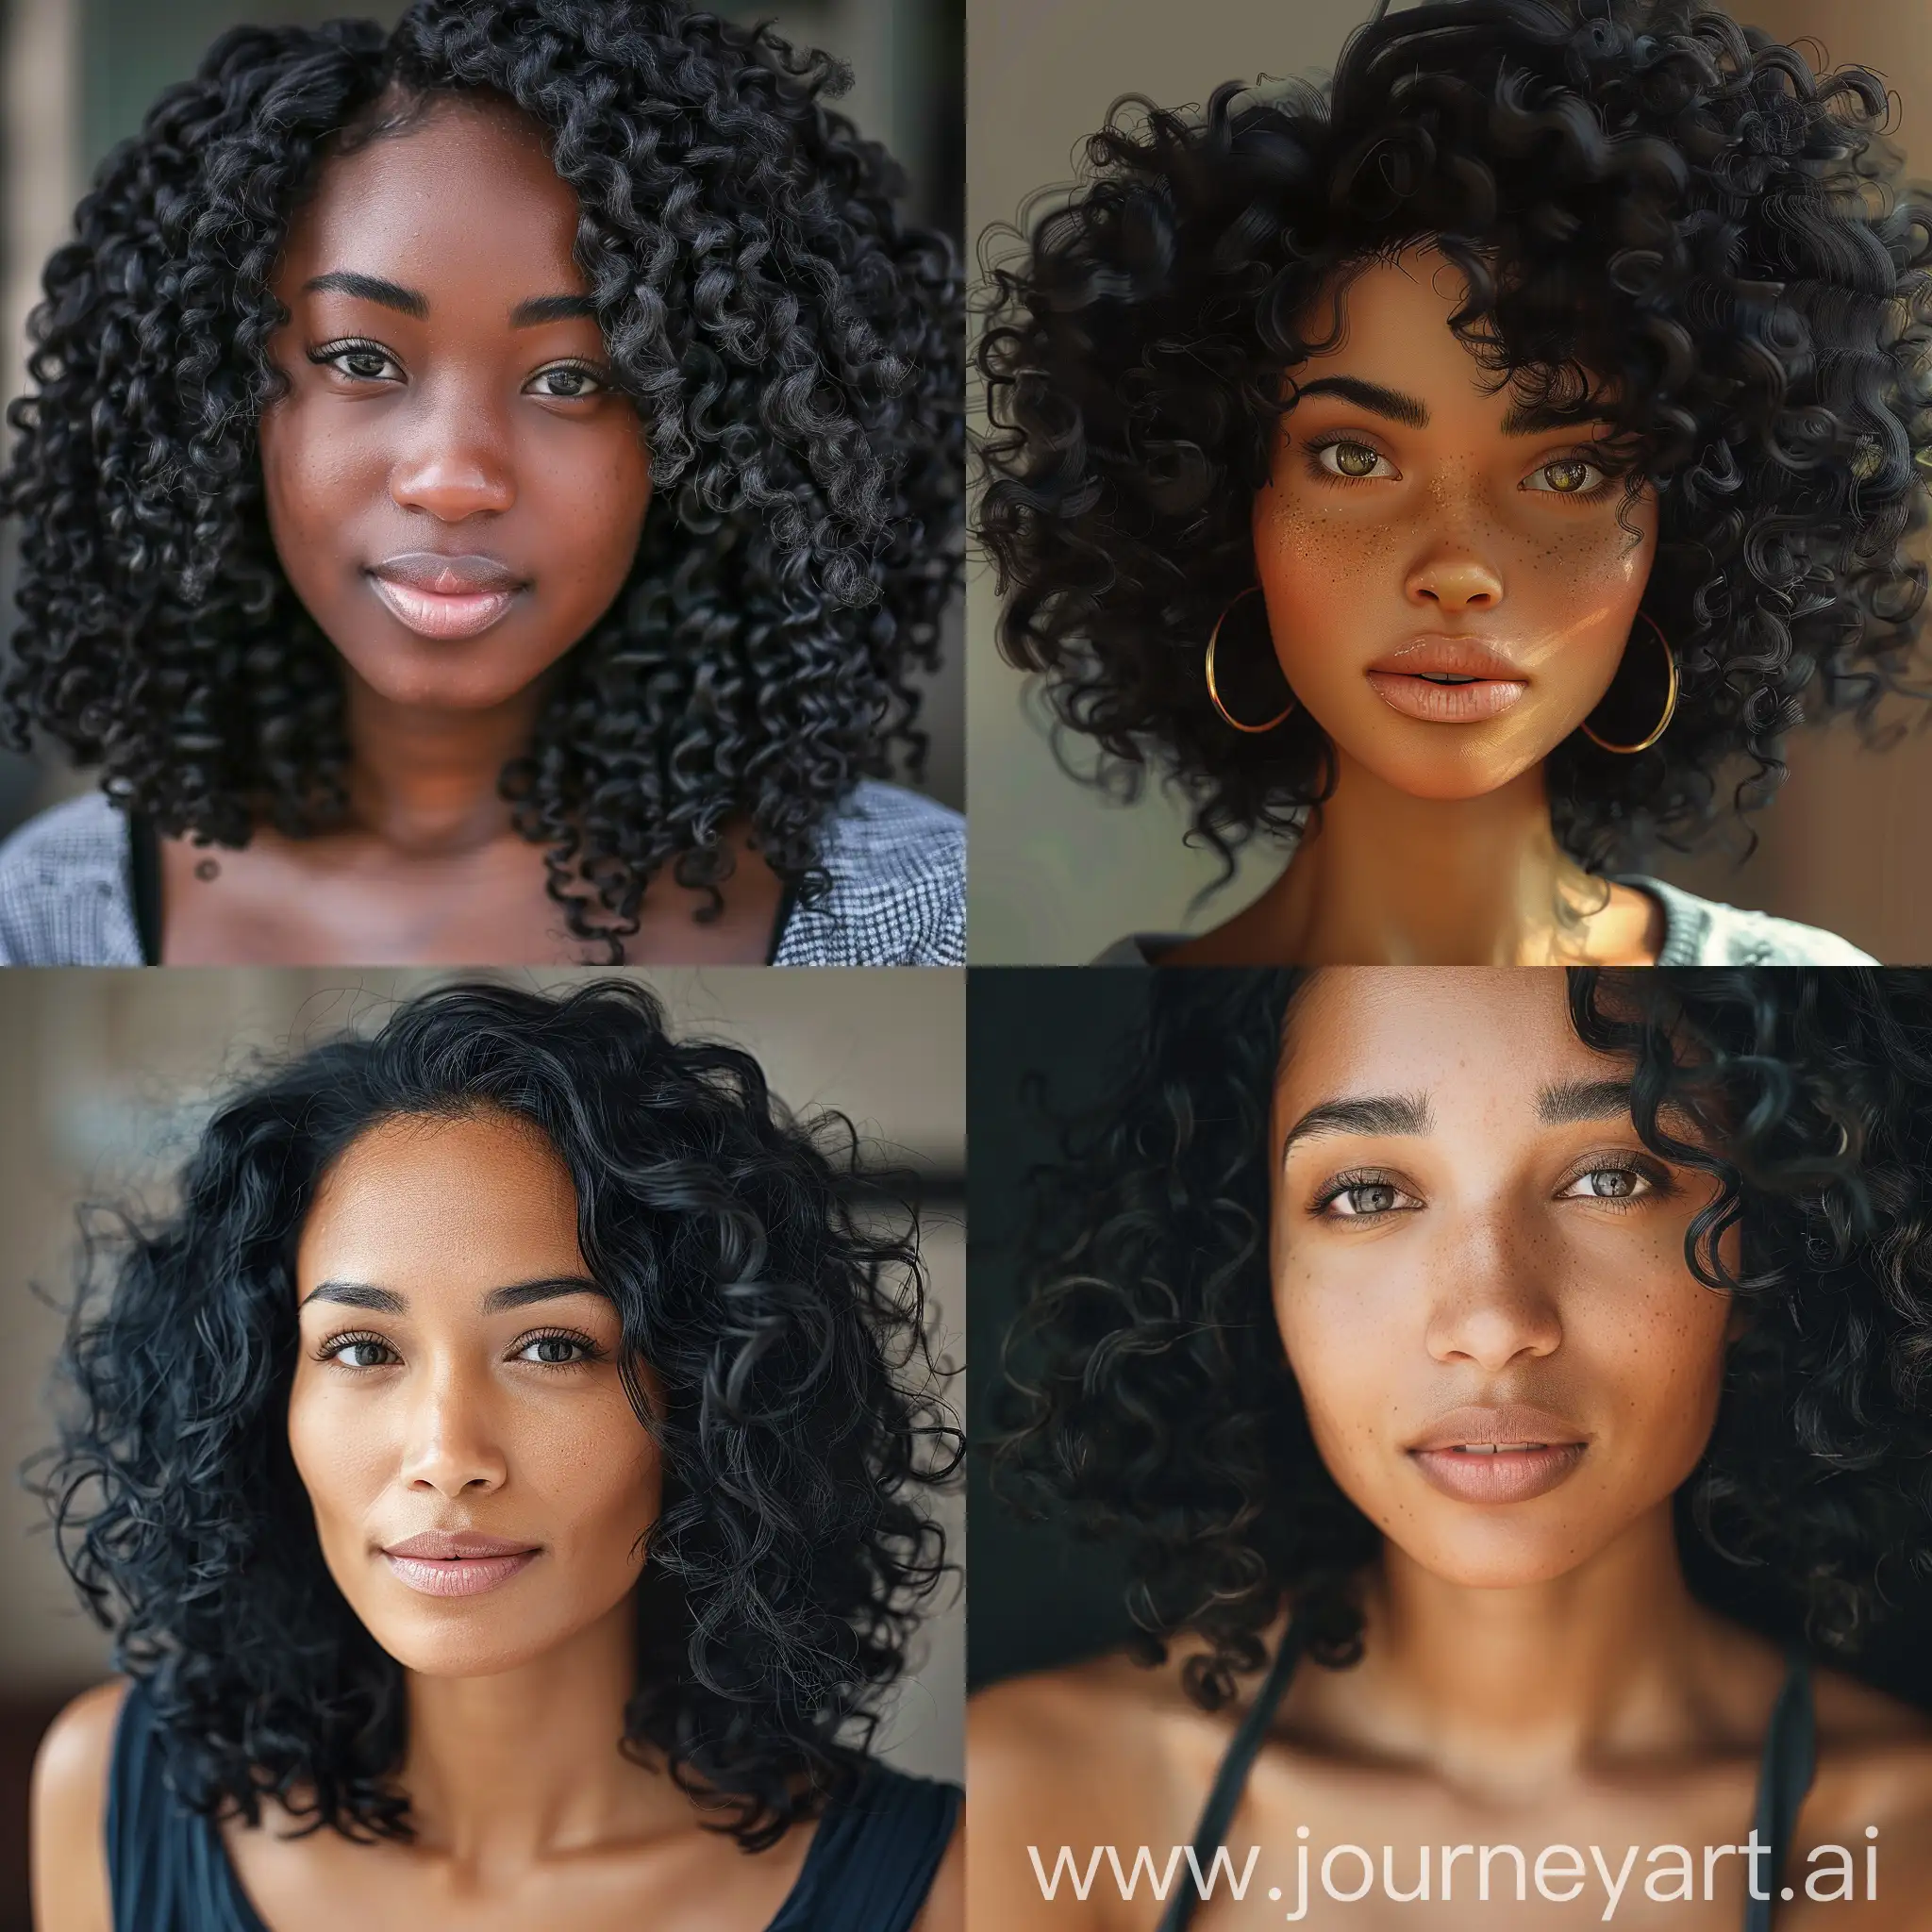 create female 30 years old, black, curly hair